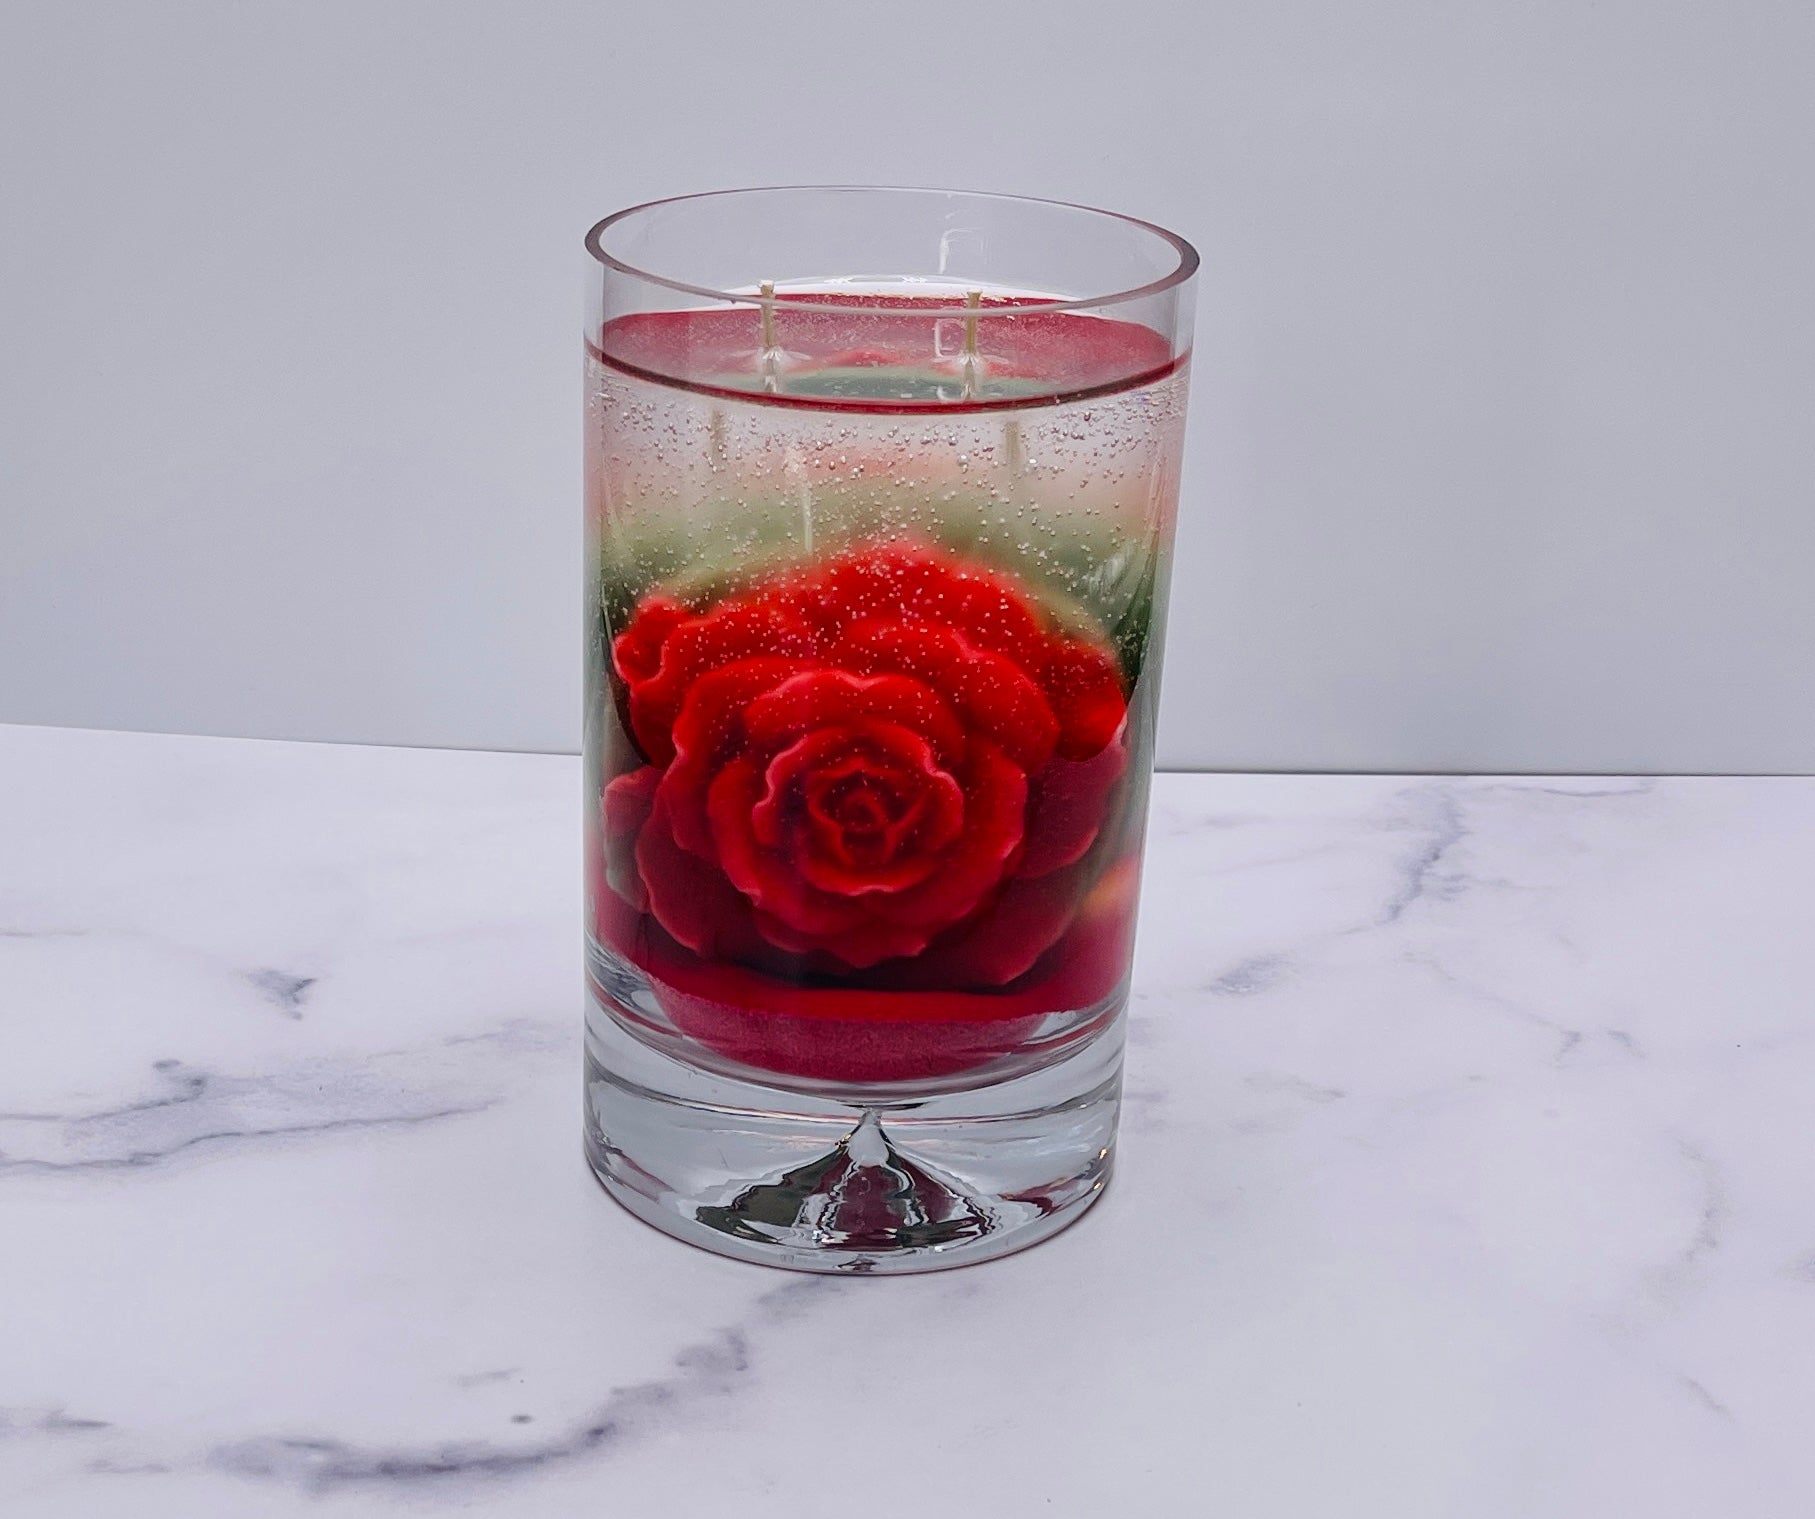 Scarlet Blossom: Red Roses in a Vase